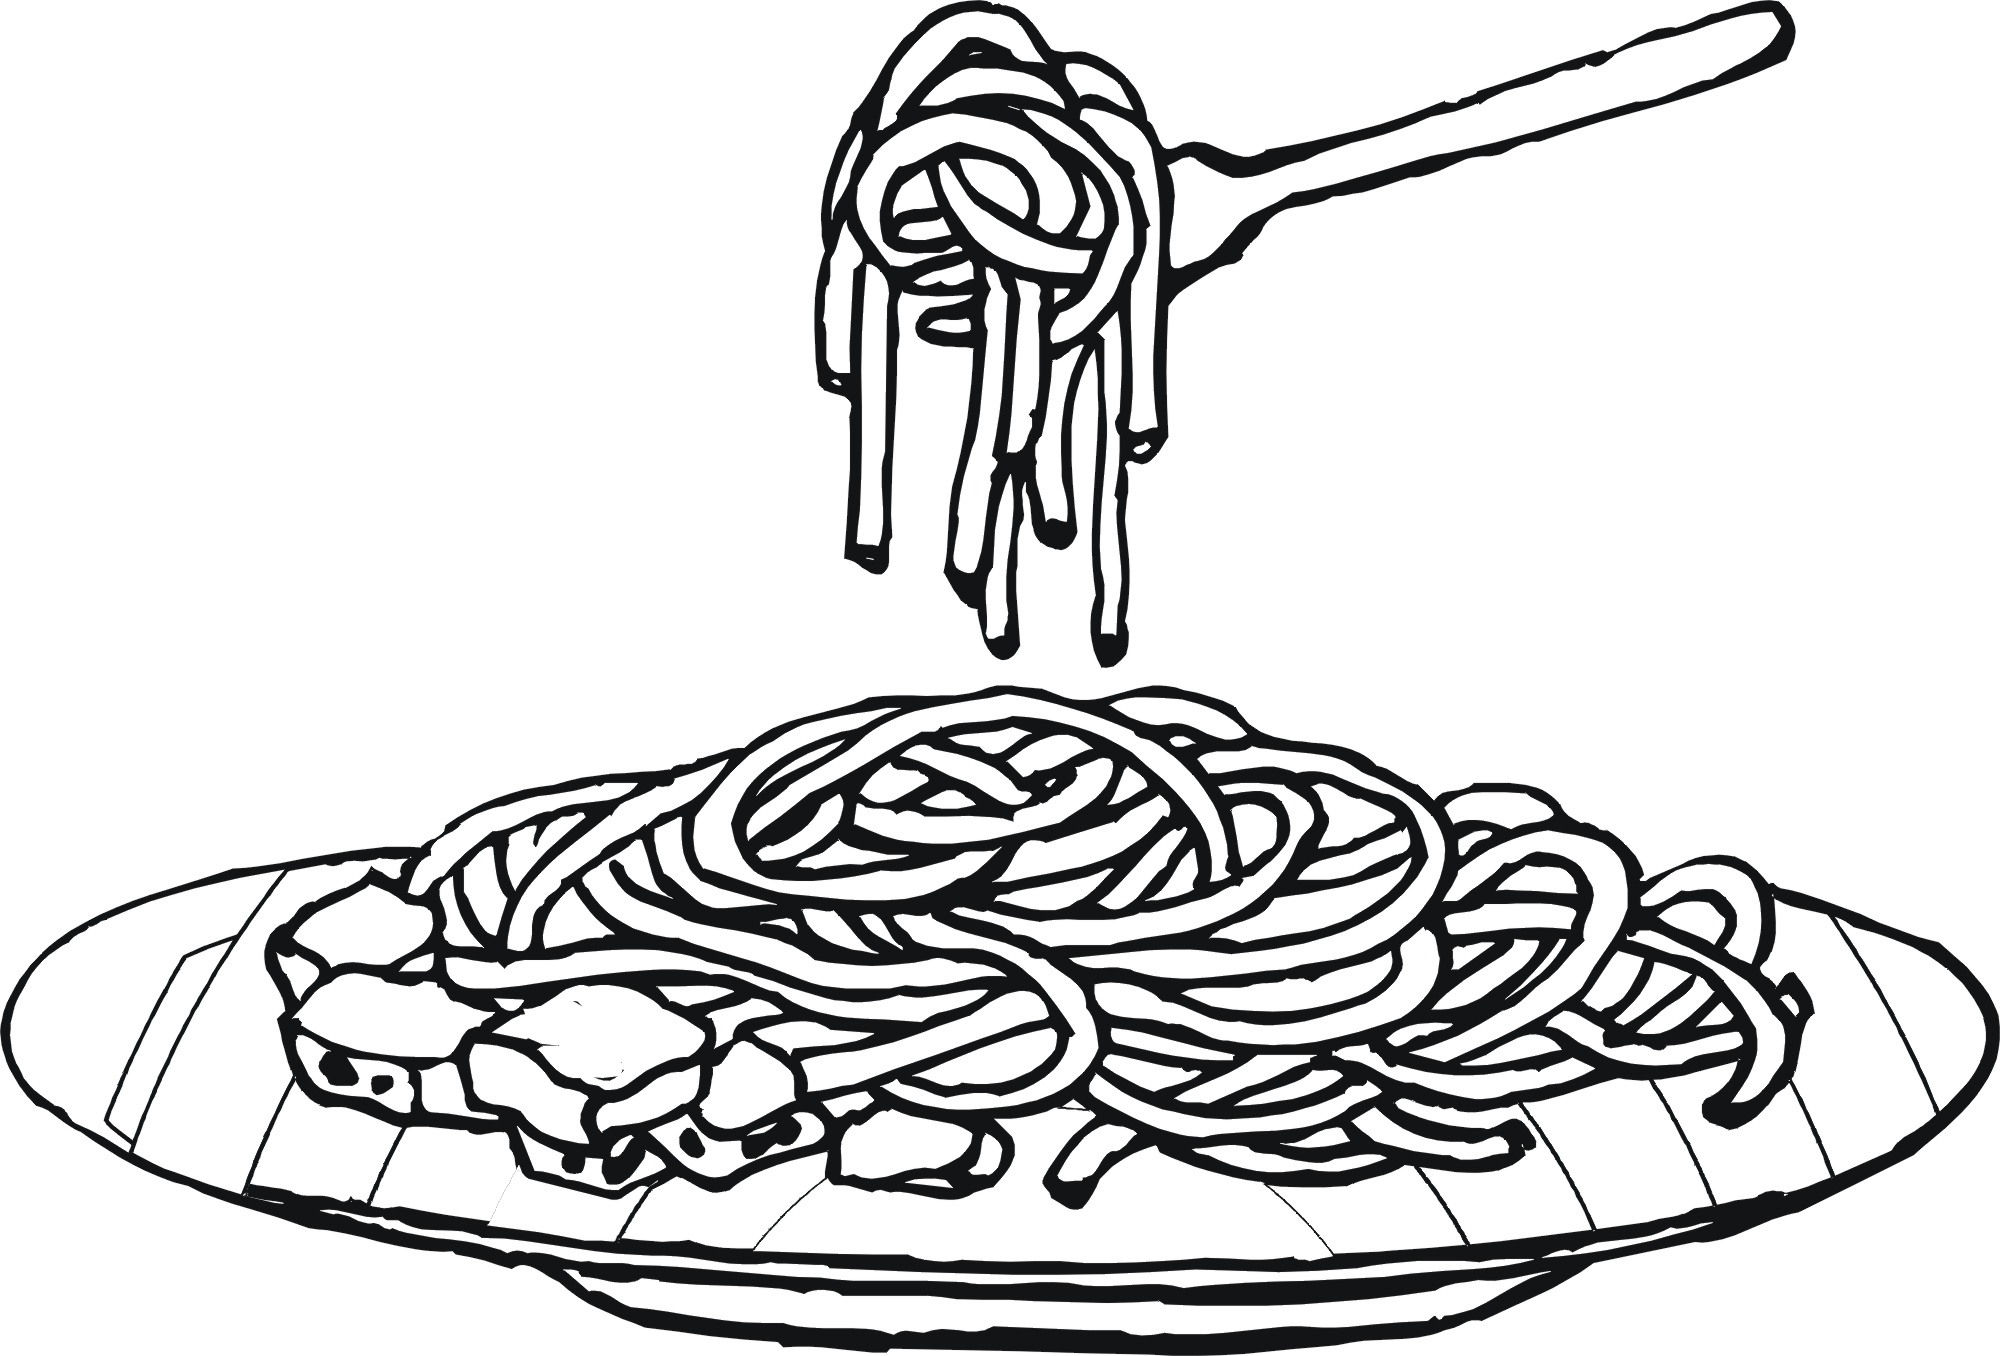 Spaghetti cartoons free download on jpg